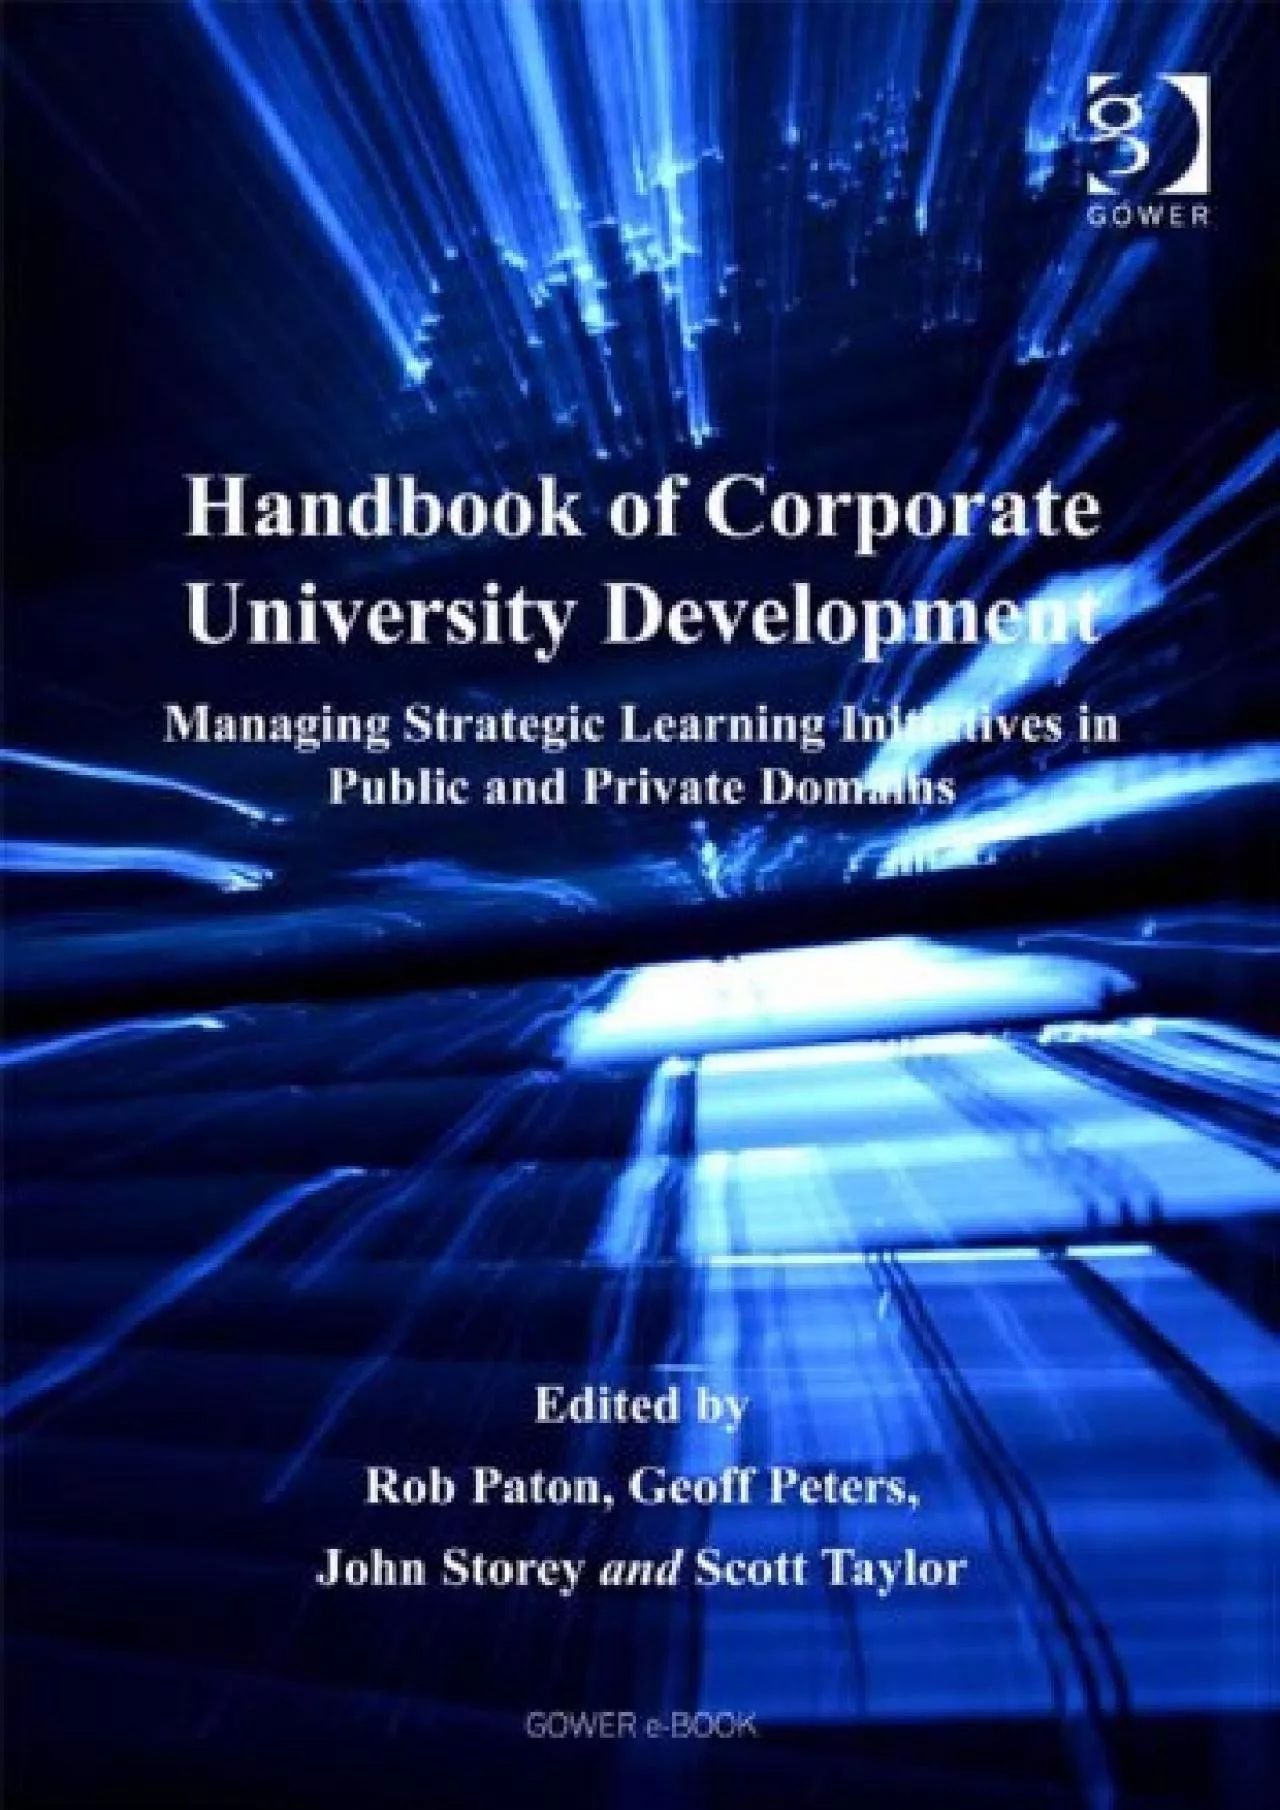 [READ] Handbook of Corporate University Development: Managing Strategic Learning Initiatives